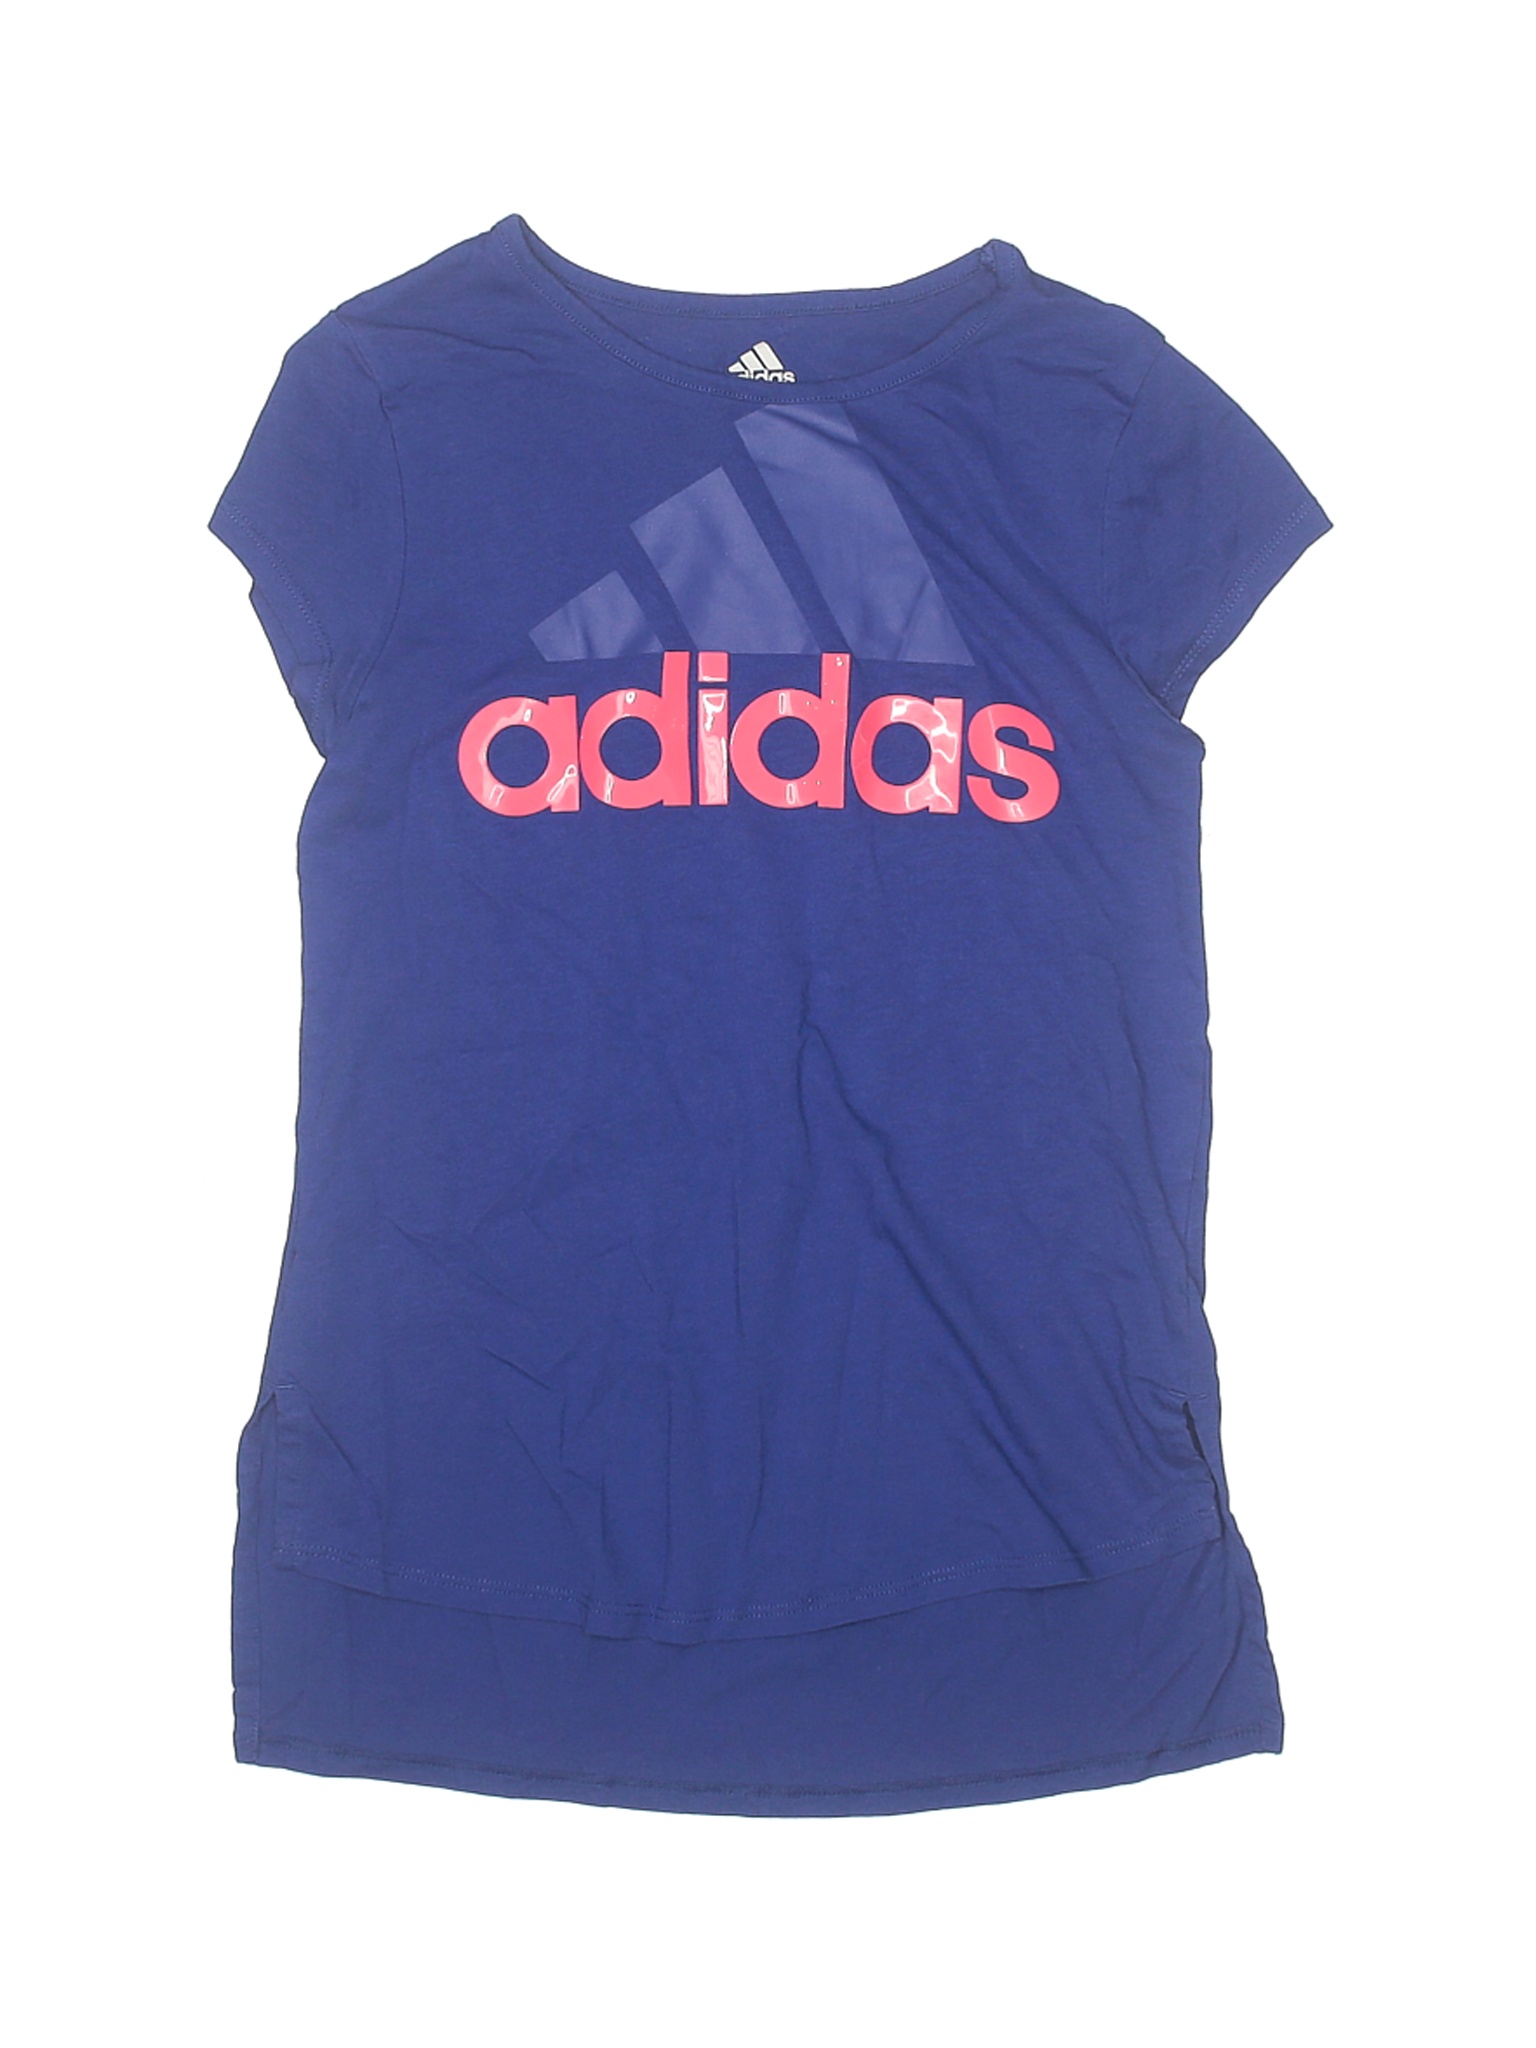 Adidas Girls Blue Active T-Shirt 14 | eBay